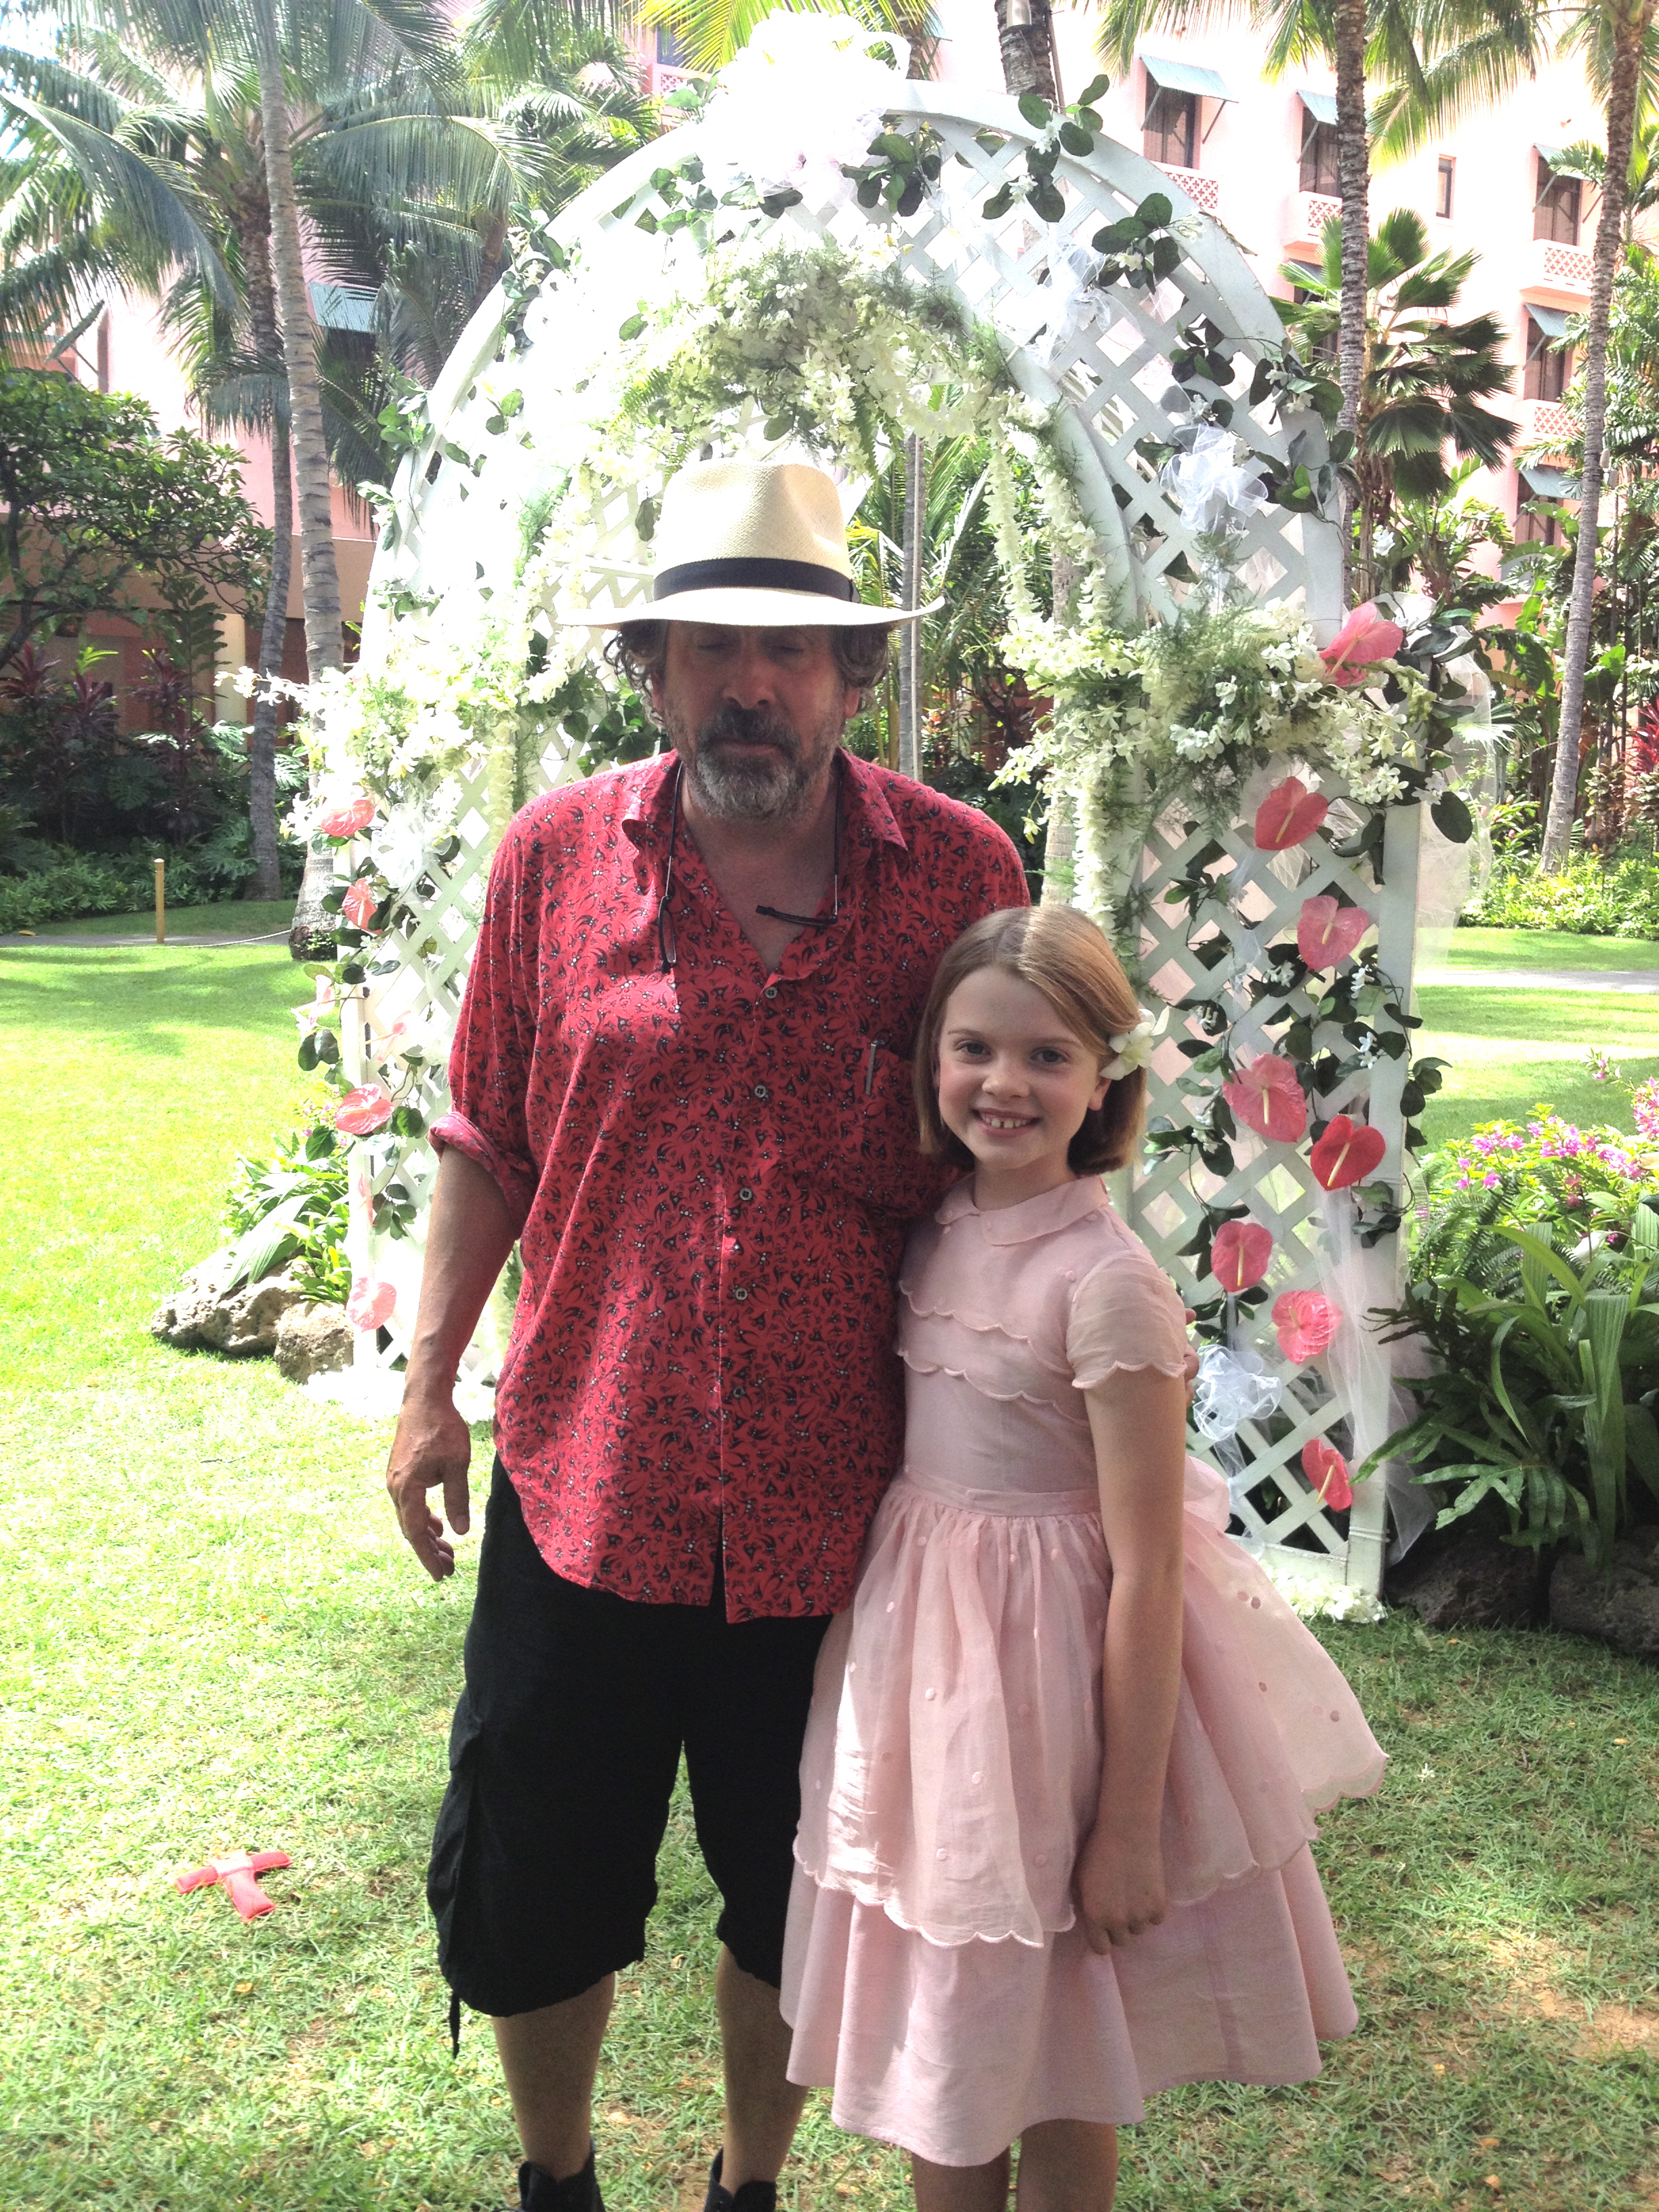 Delaney Raye Wrapping on the set of Big Eyes, with Tim Burton at the Royal Hawaiian in Hawaii :)